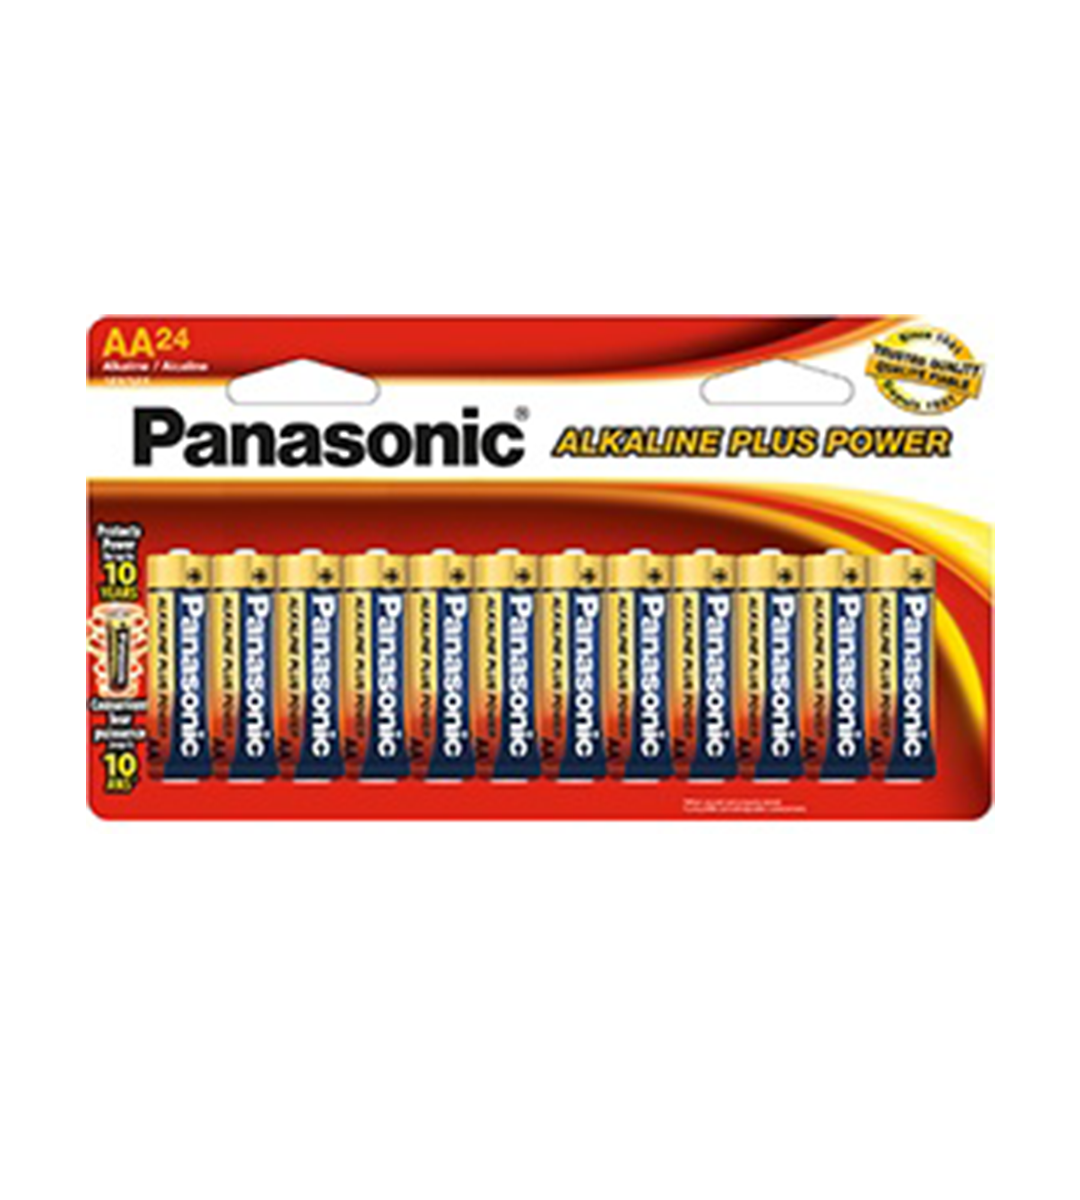 AA Zinc Chloride Batteries, 24 Pack